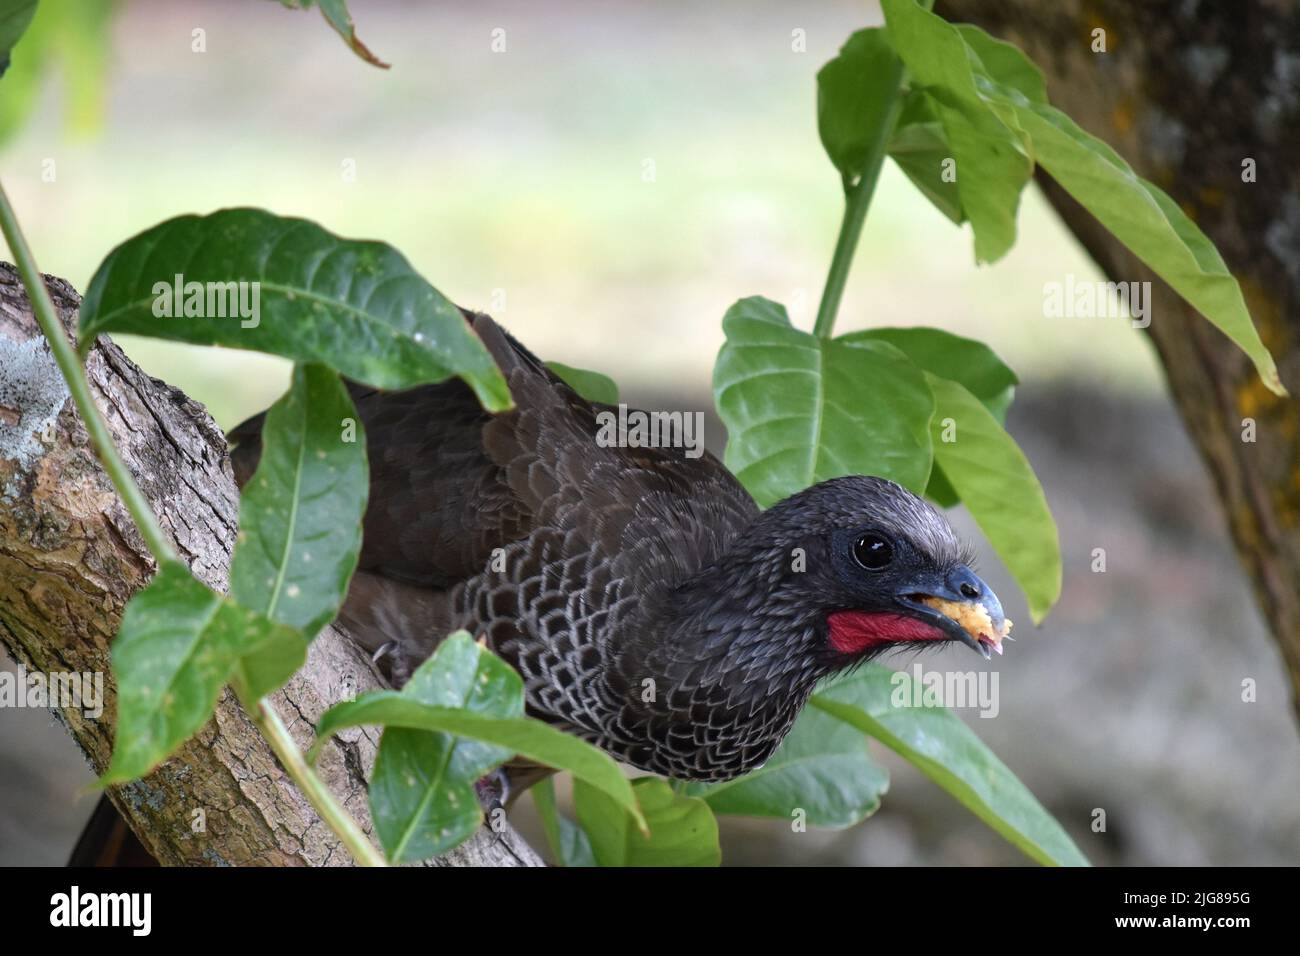 A closeup shot of a Spix's guan (Penelope jacquacu) with food in its beak Stock Photo